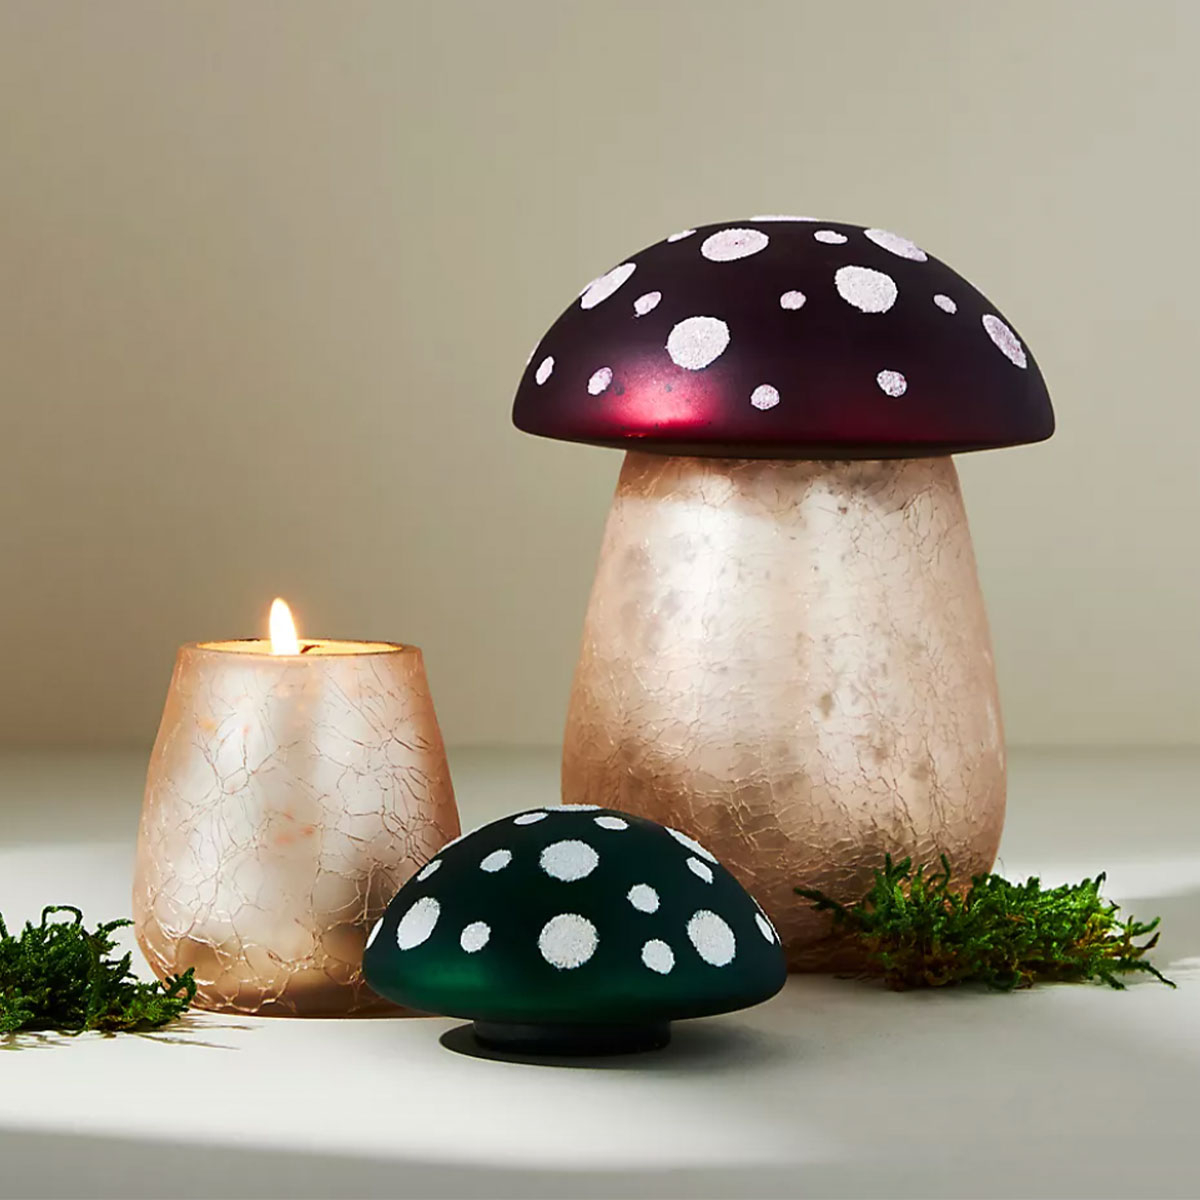 Anthropologie's Viral TikTok Mushroom Candle Is on Sale